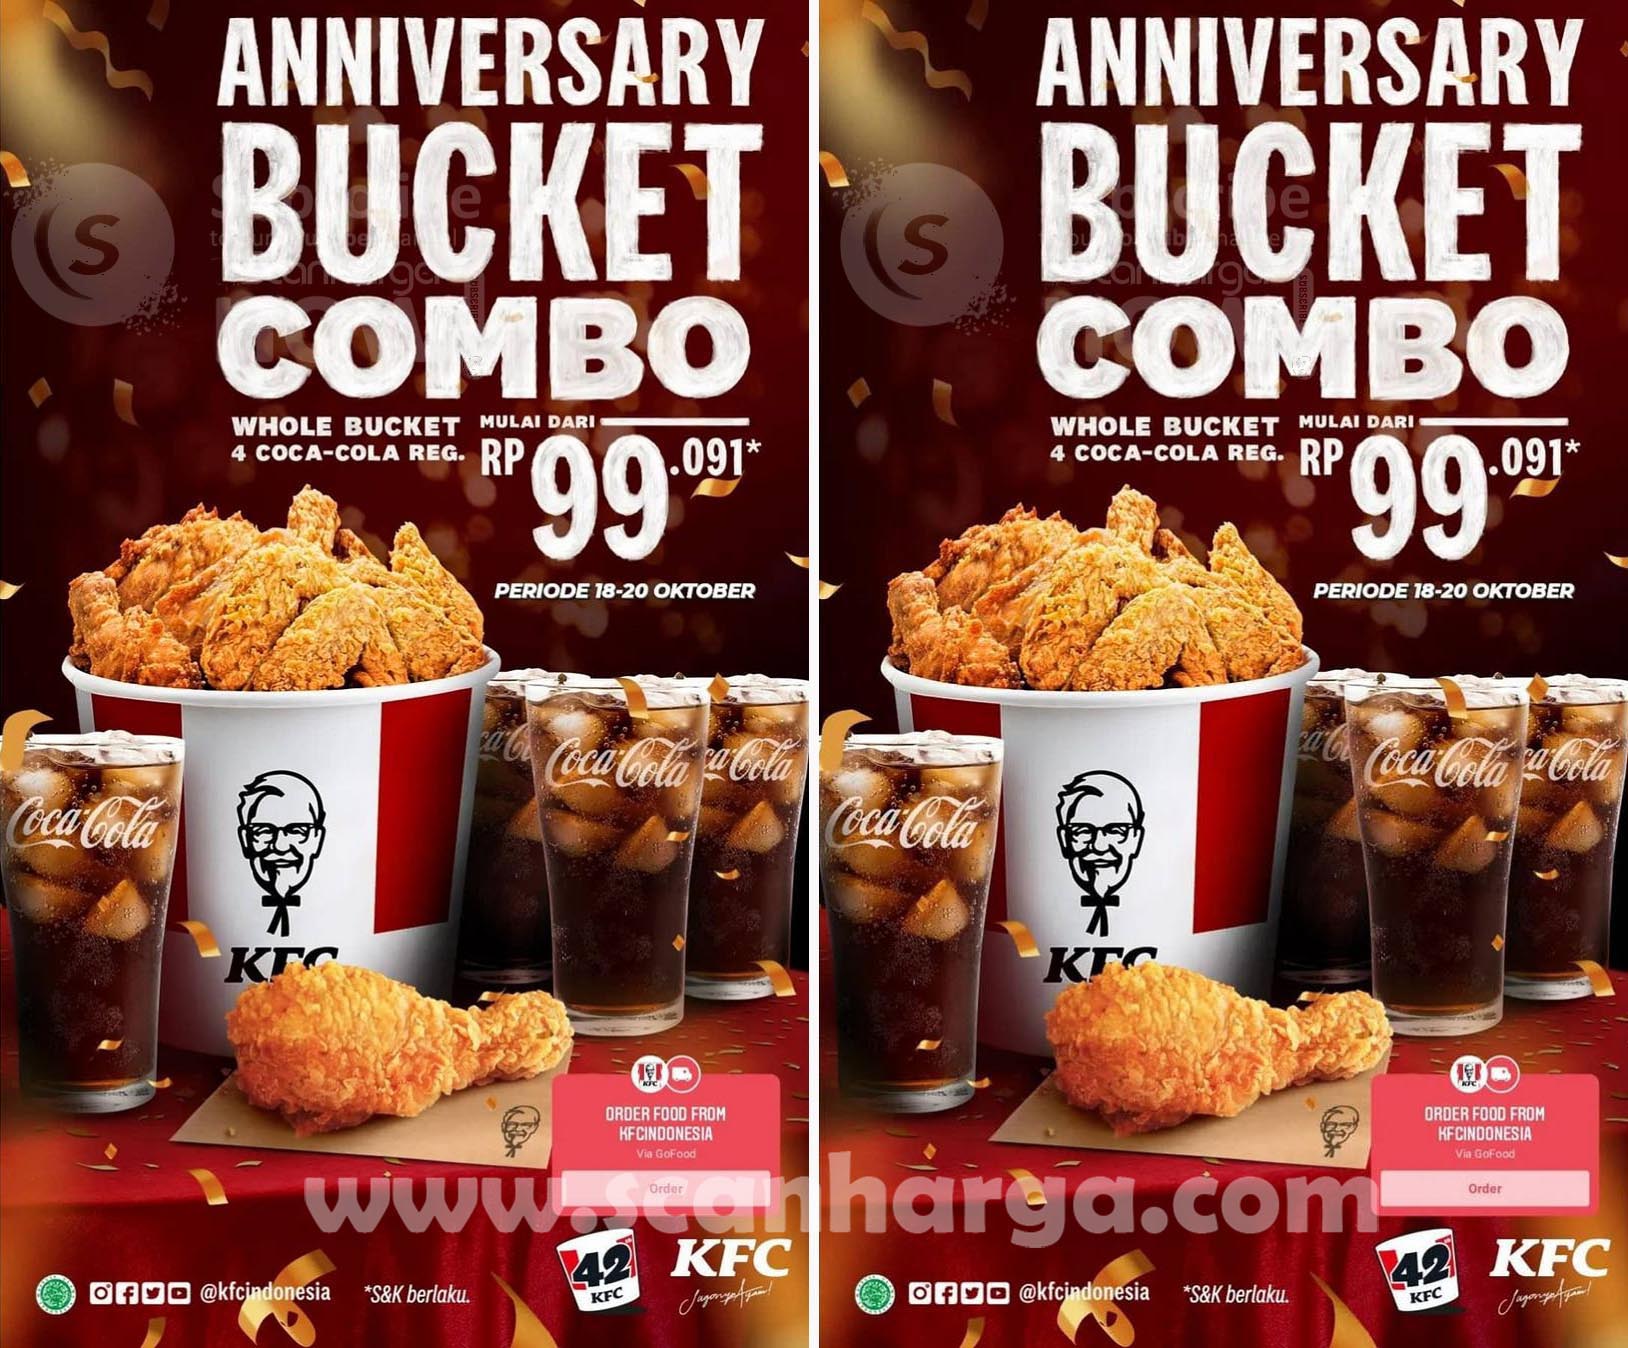 Promo KFC Annivesary Bucket Combo Harga Mulai Rp. 99.091